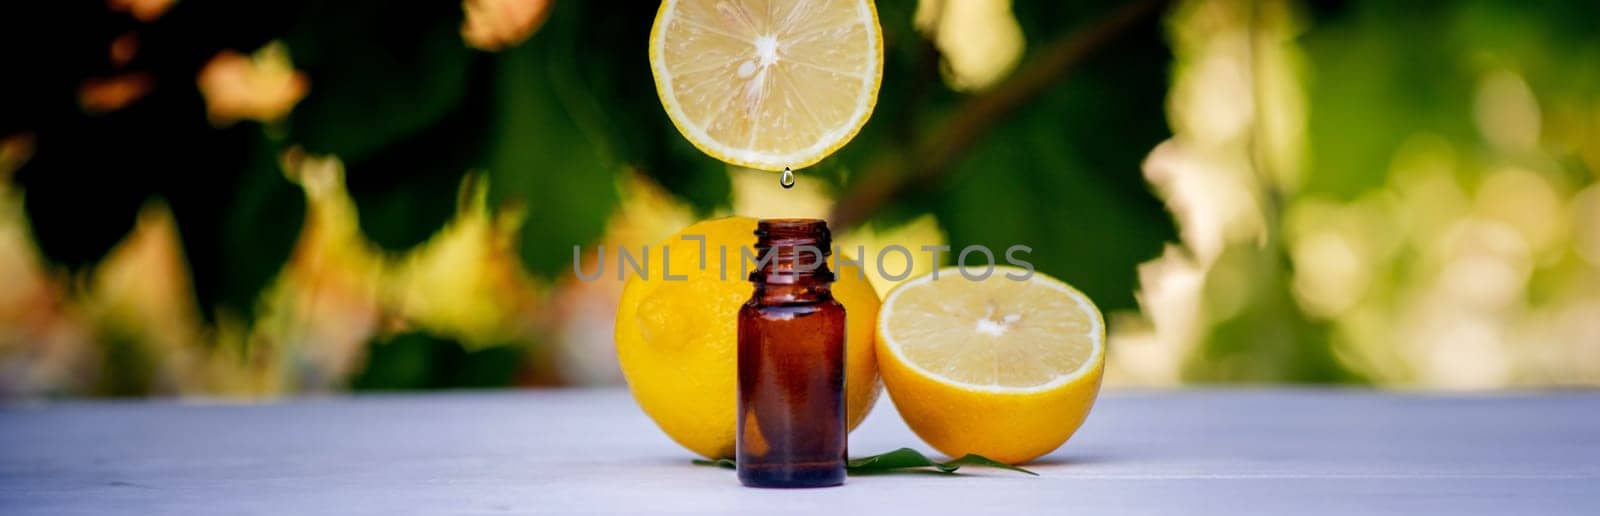 lemon essential oil and lemon fruit on a wooden white board. Selective focus